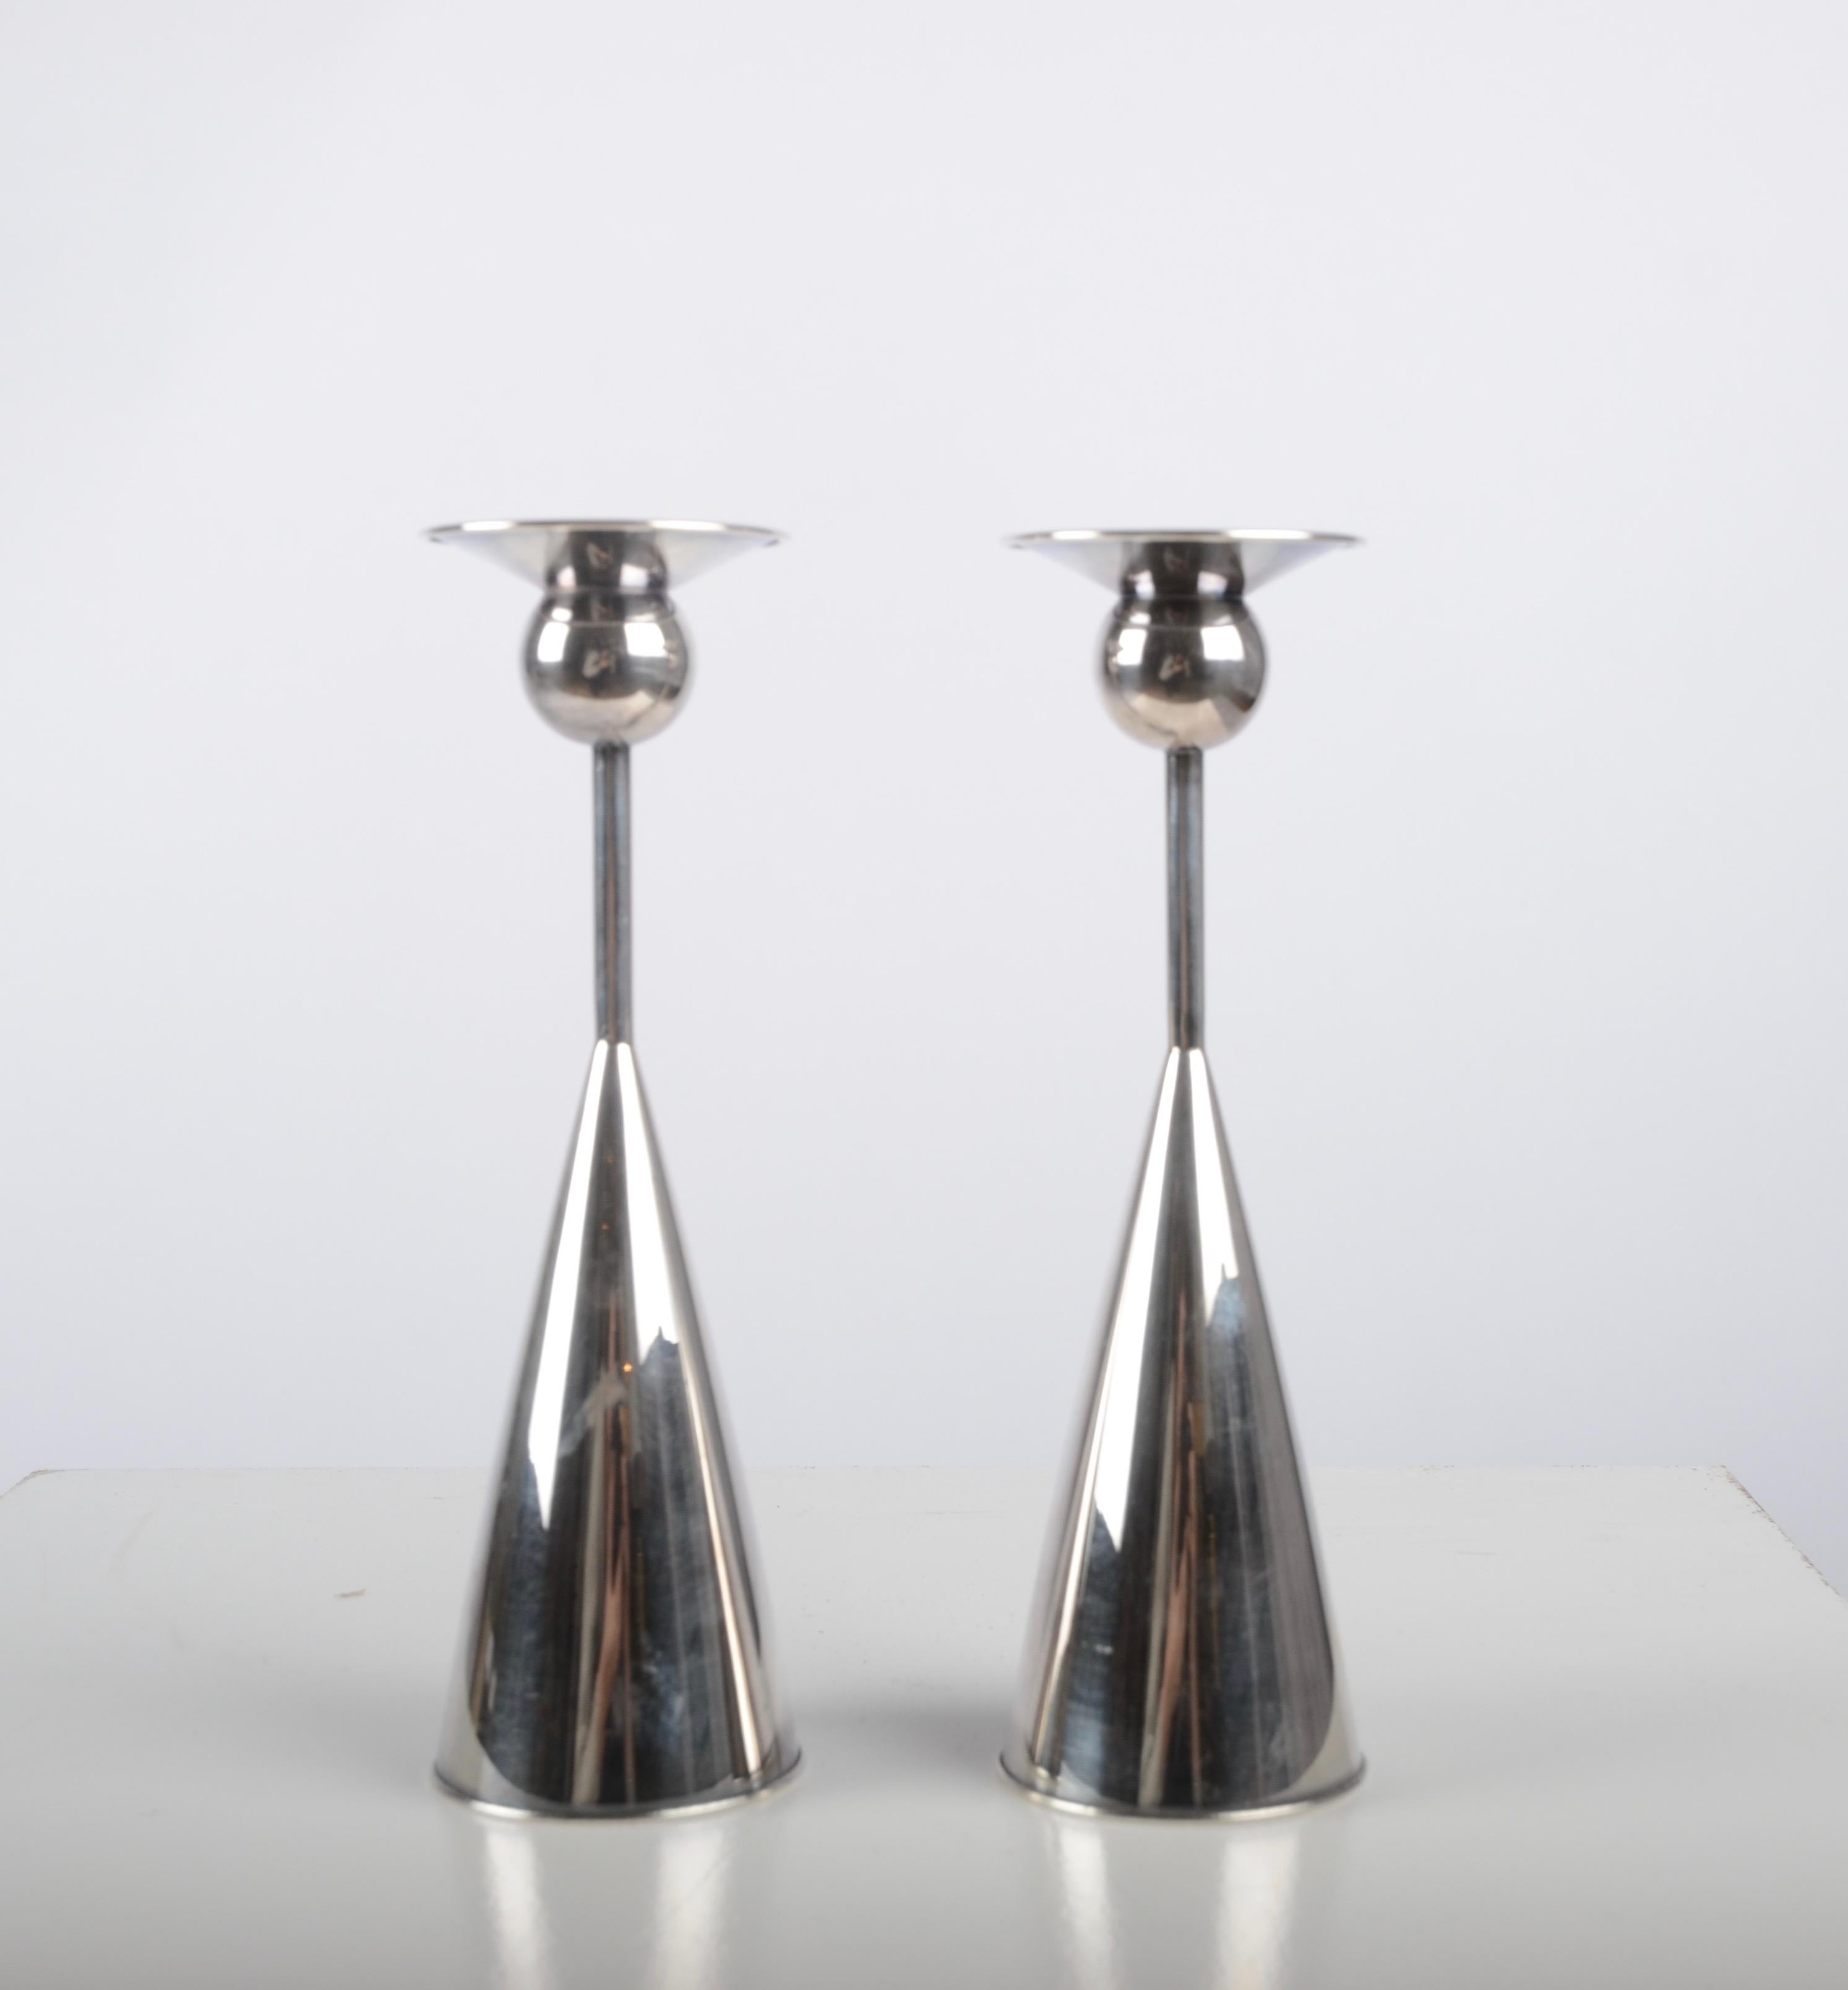 A pair of candlesticks in silver, designed by Kaj Blomqvist for Kultakeskus Tavastehus, Finland, 1966 (N7). Signed KB and finish hallmarks.